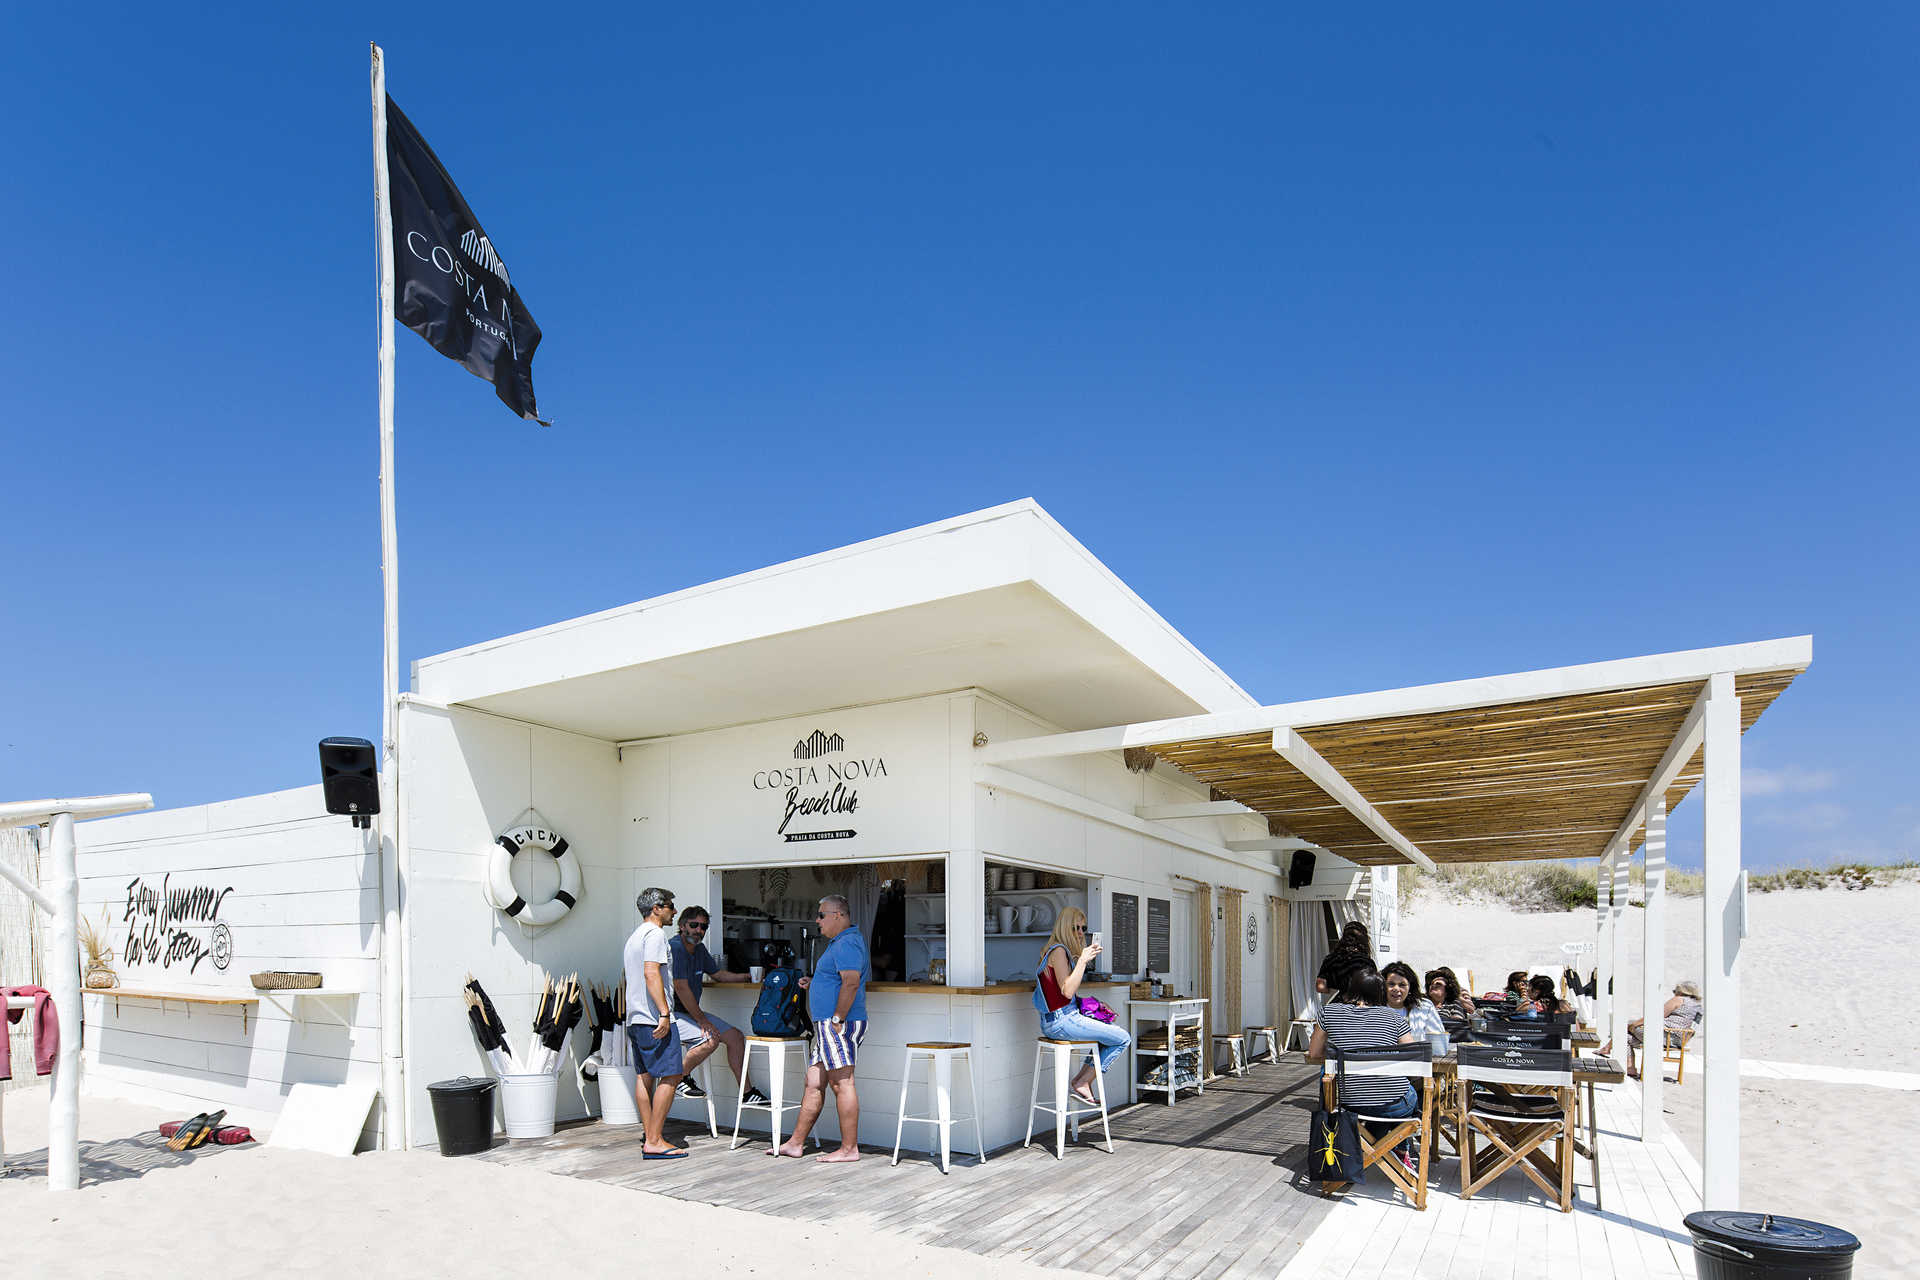 Bar Costa Nova Beach Club